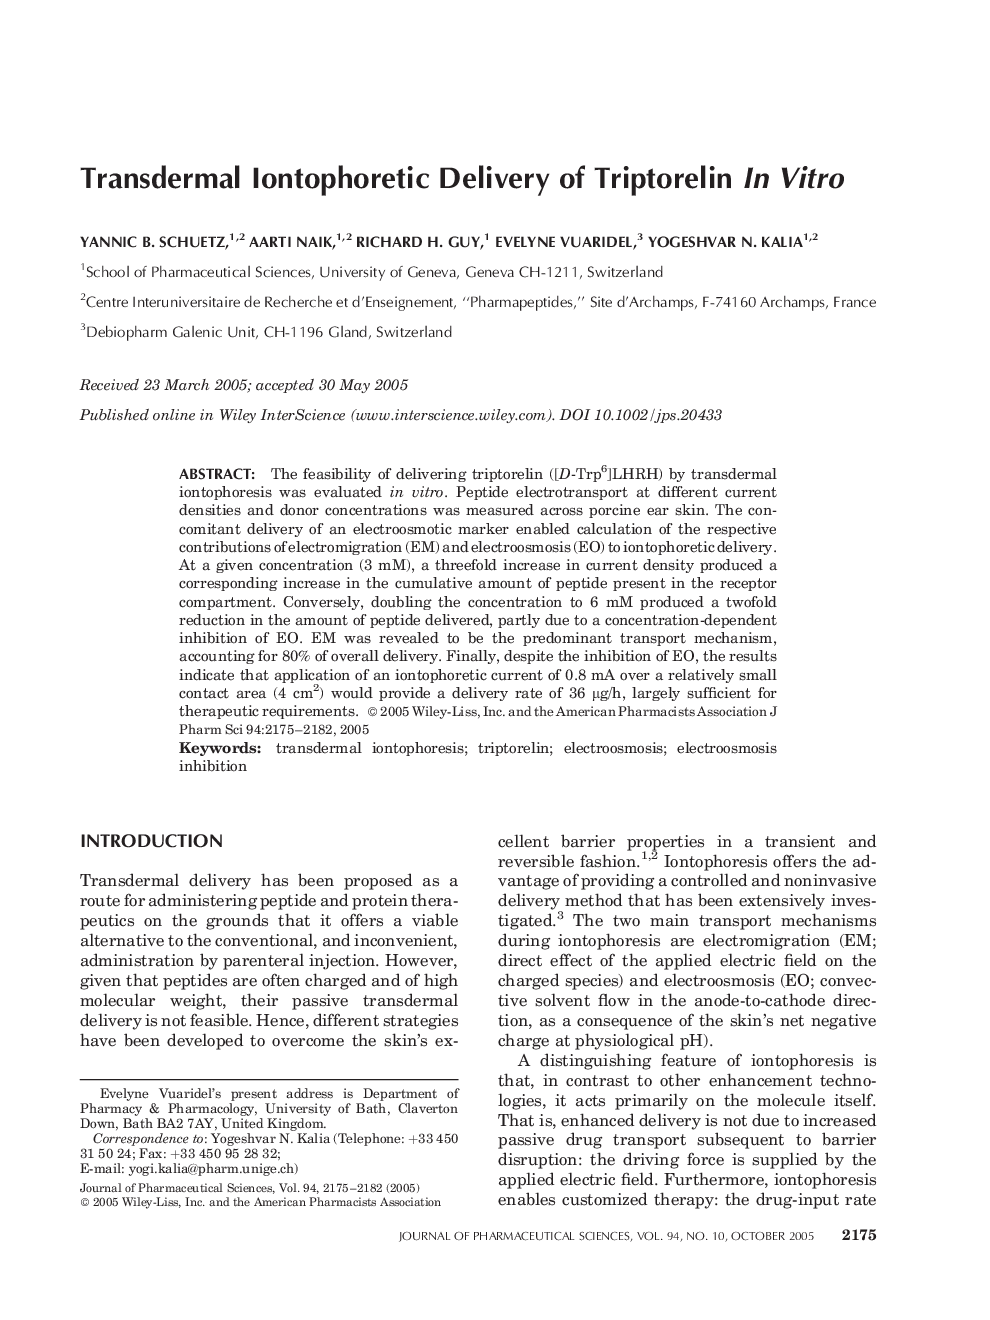 Transdermal Iontophoretic Delivery of Triptorelin in Vitro